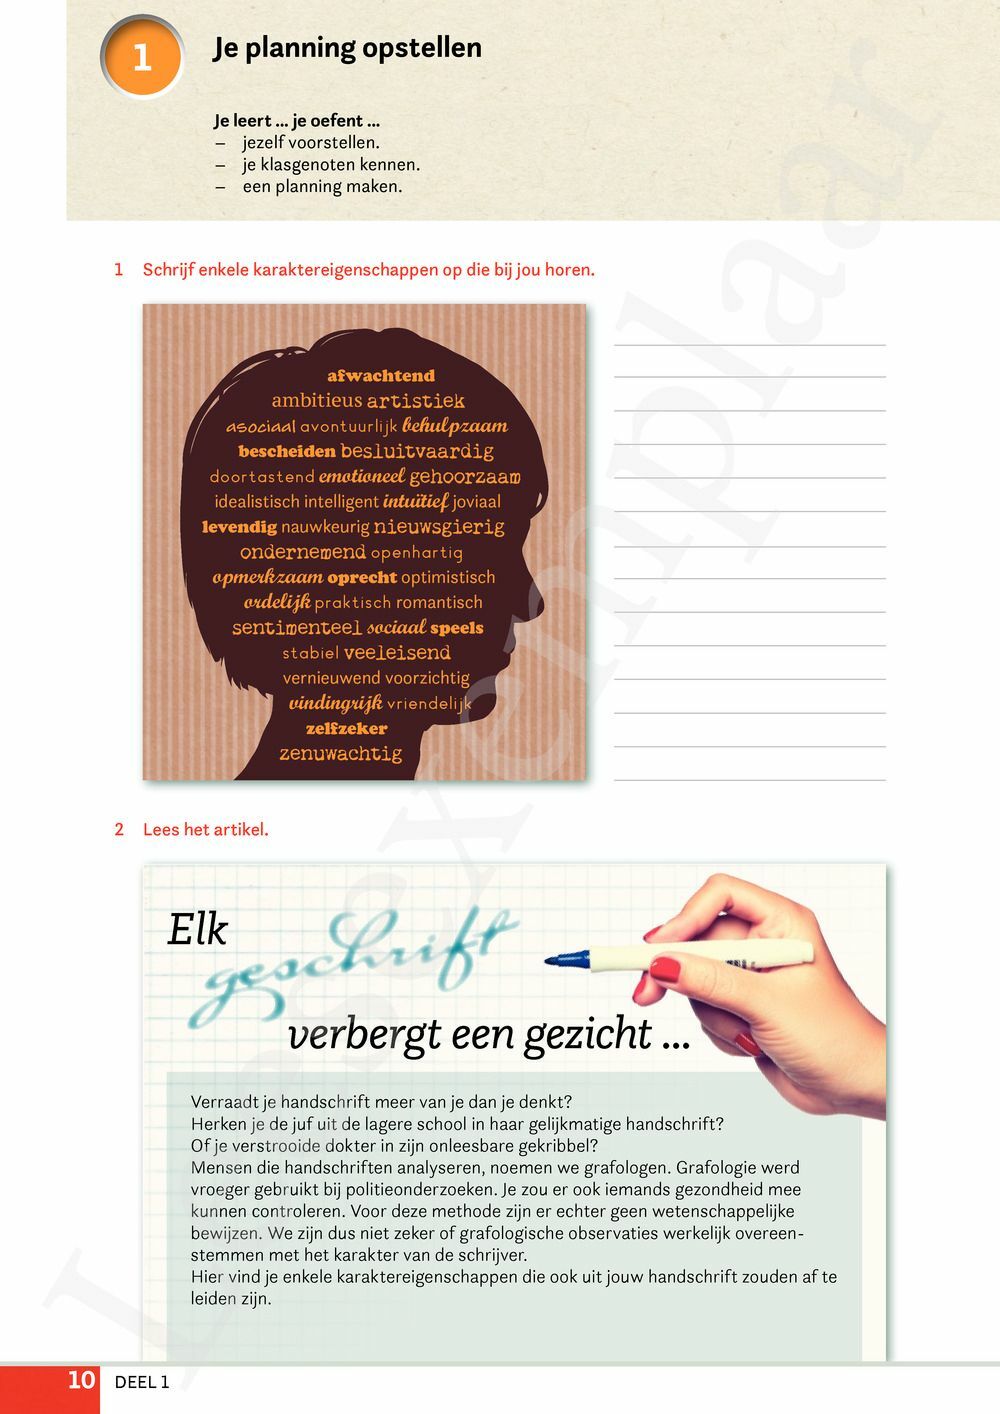 Preview: Campus Nederlands 2 Leerwerkboek Plus (incl. Pelckmans Portaal)